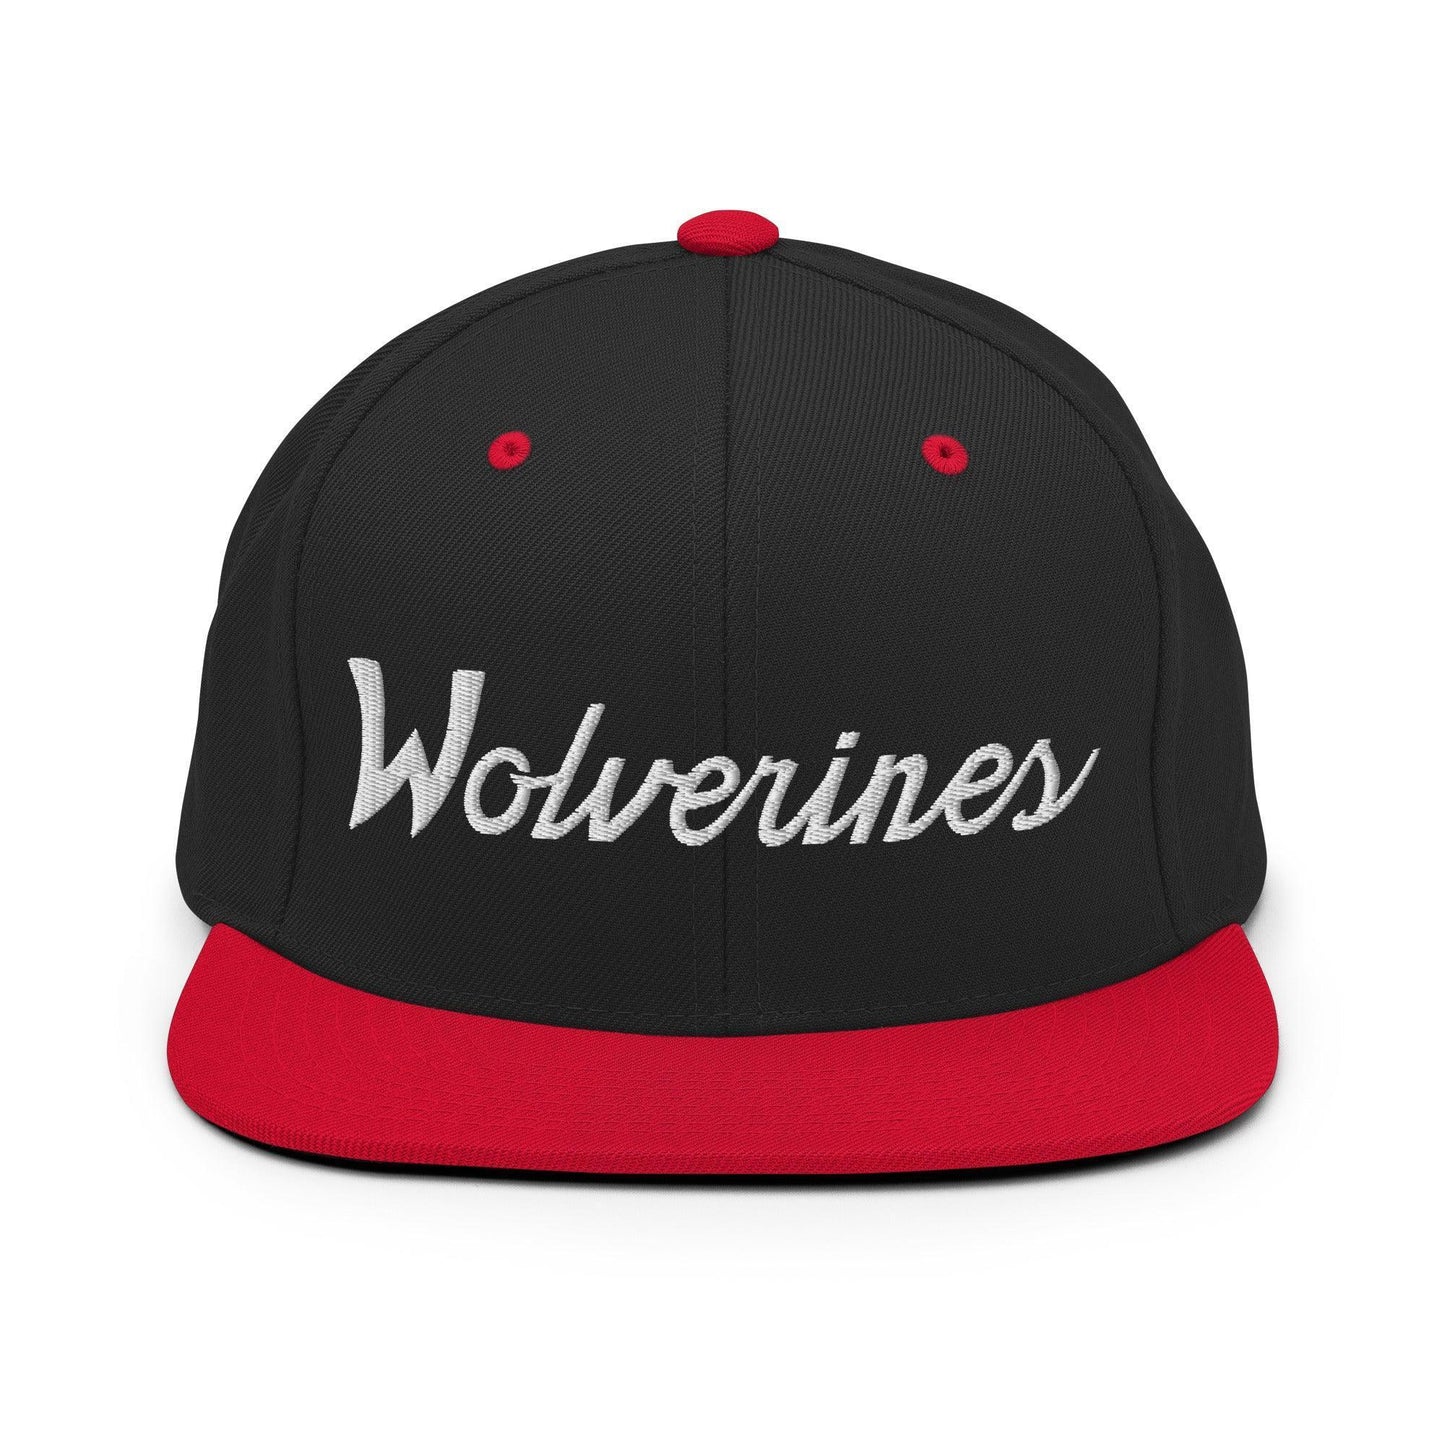 Wolverines School Mascot Script Snapback Hat Black/ Red